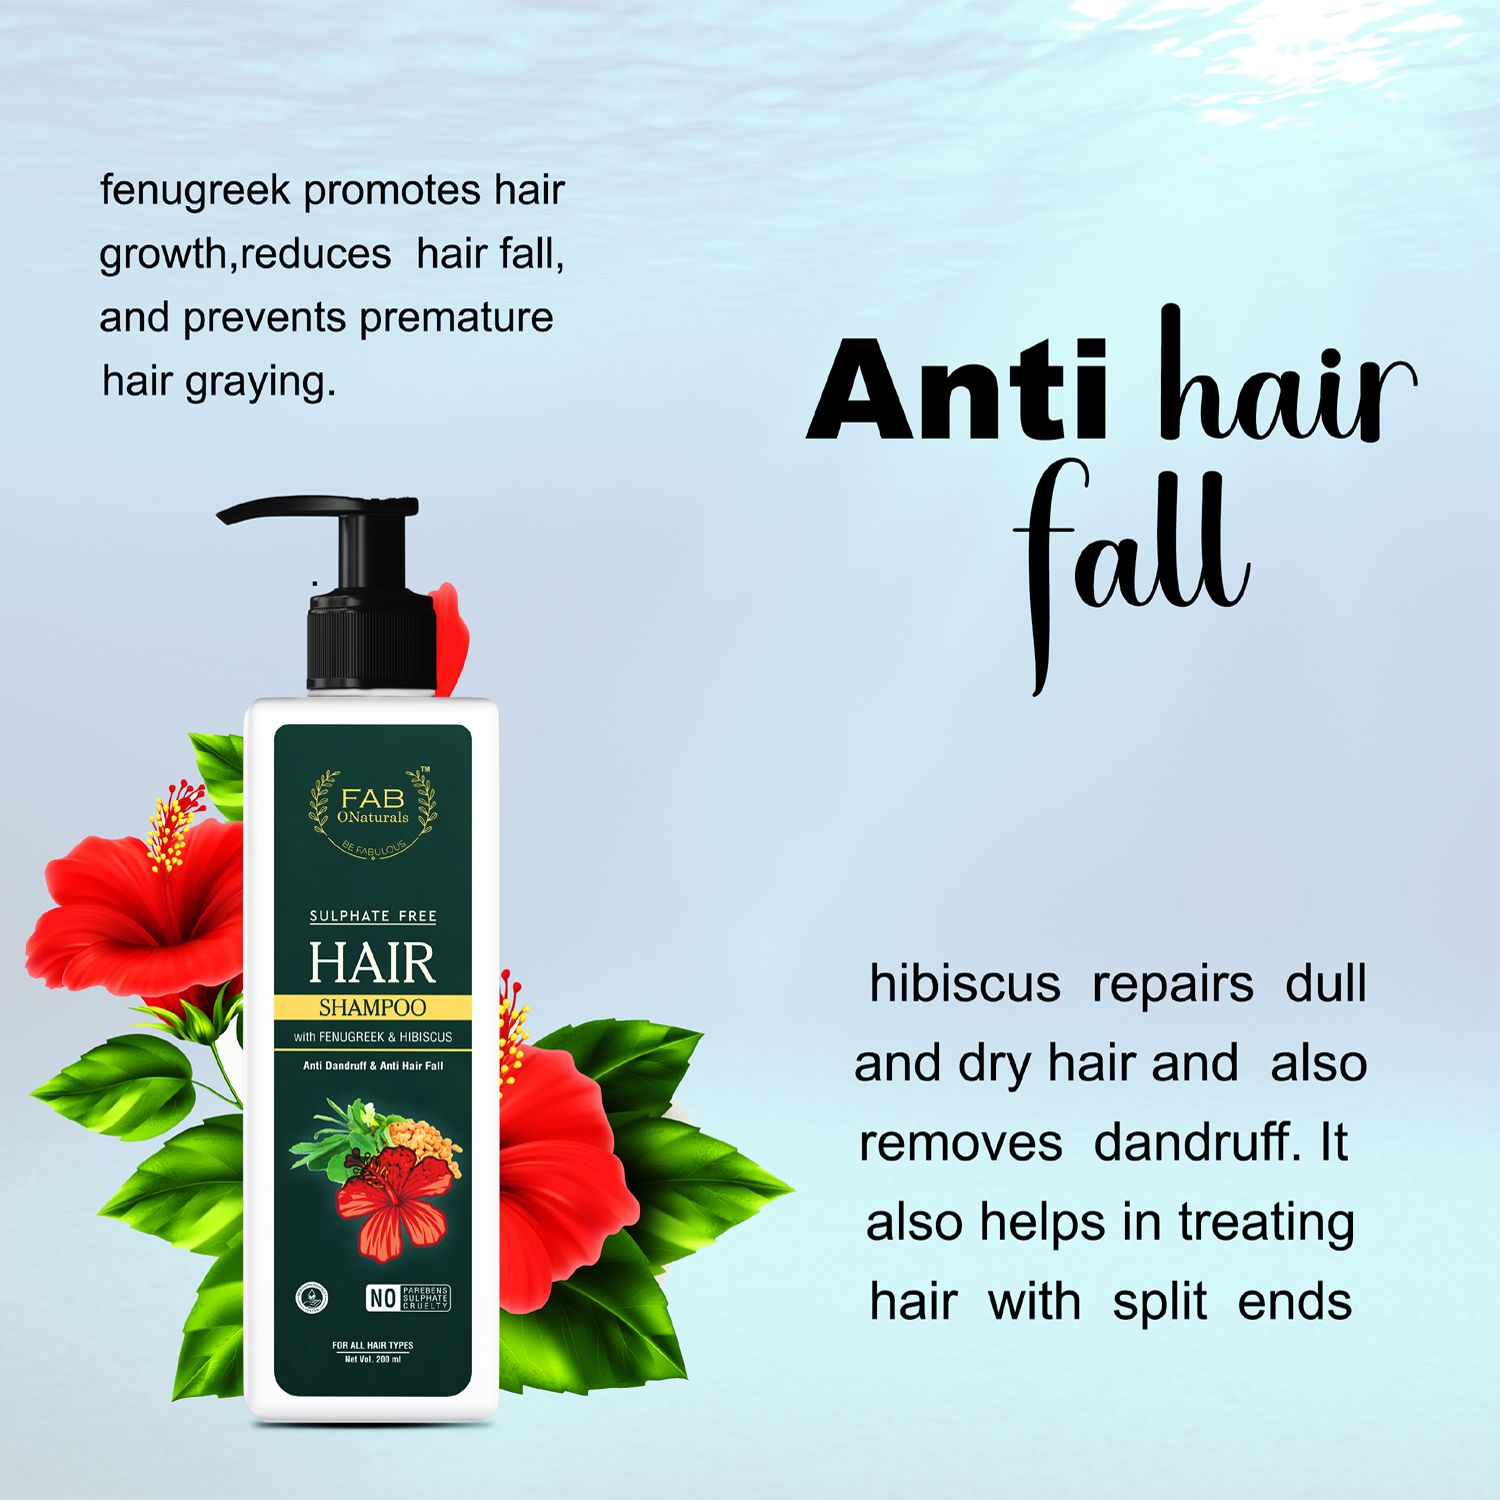 Buy Fabonaturals Hair Growth Shampoo Online